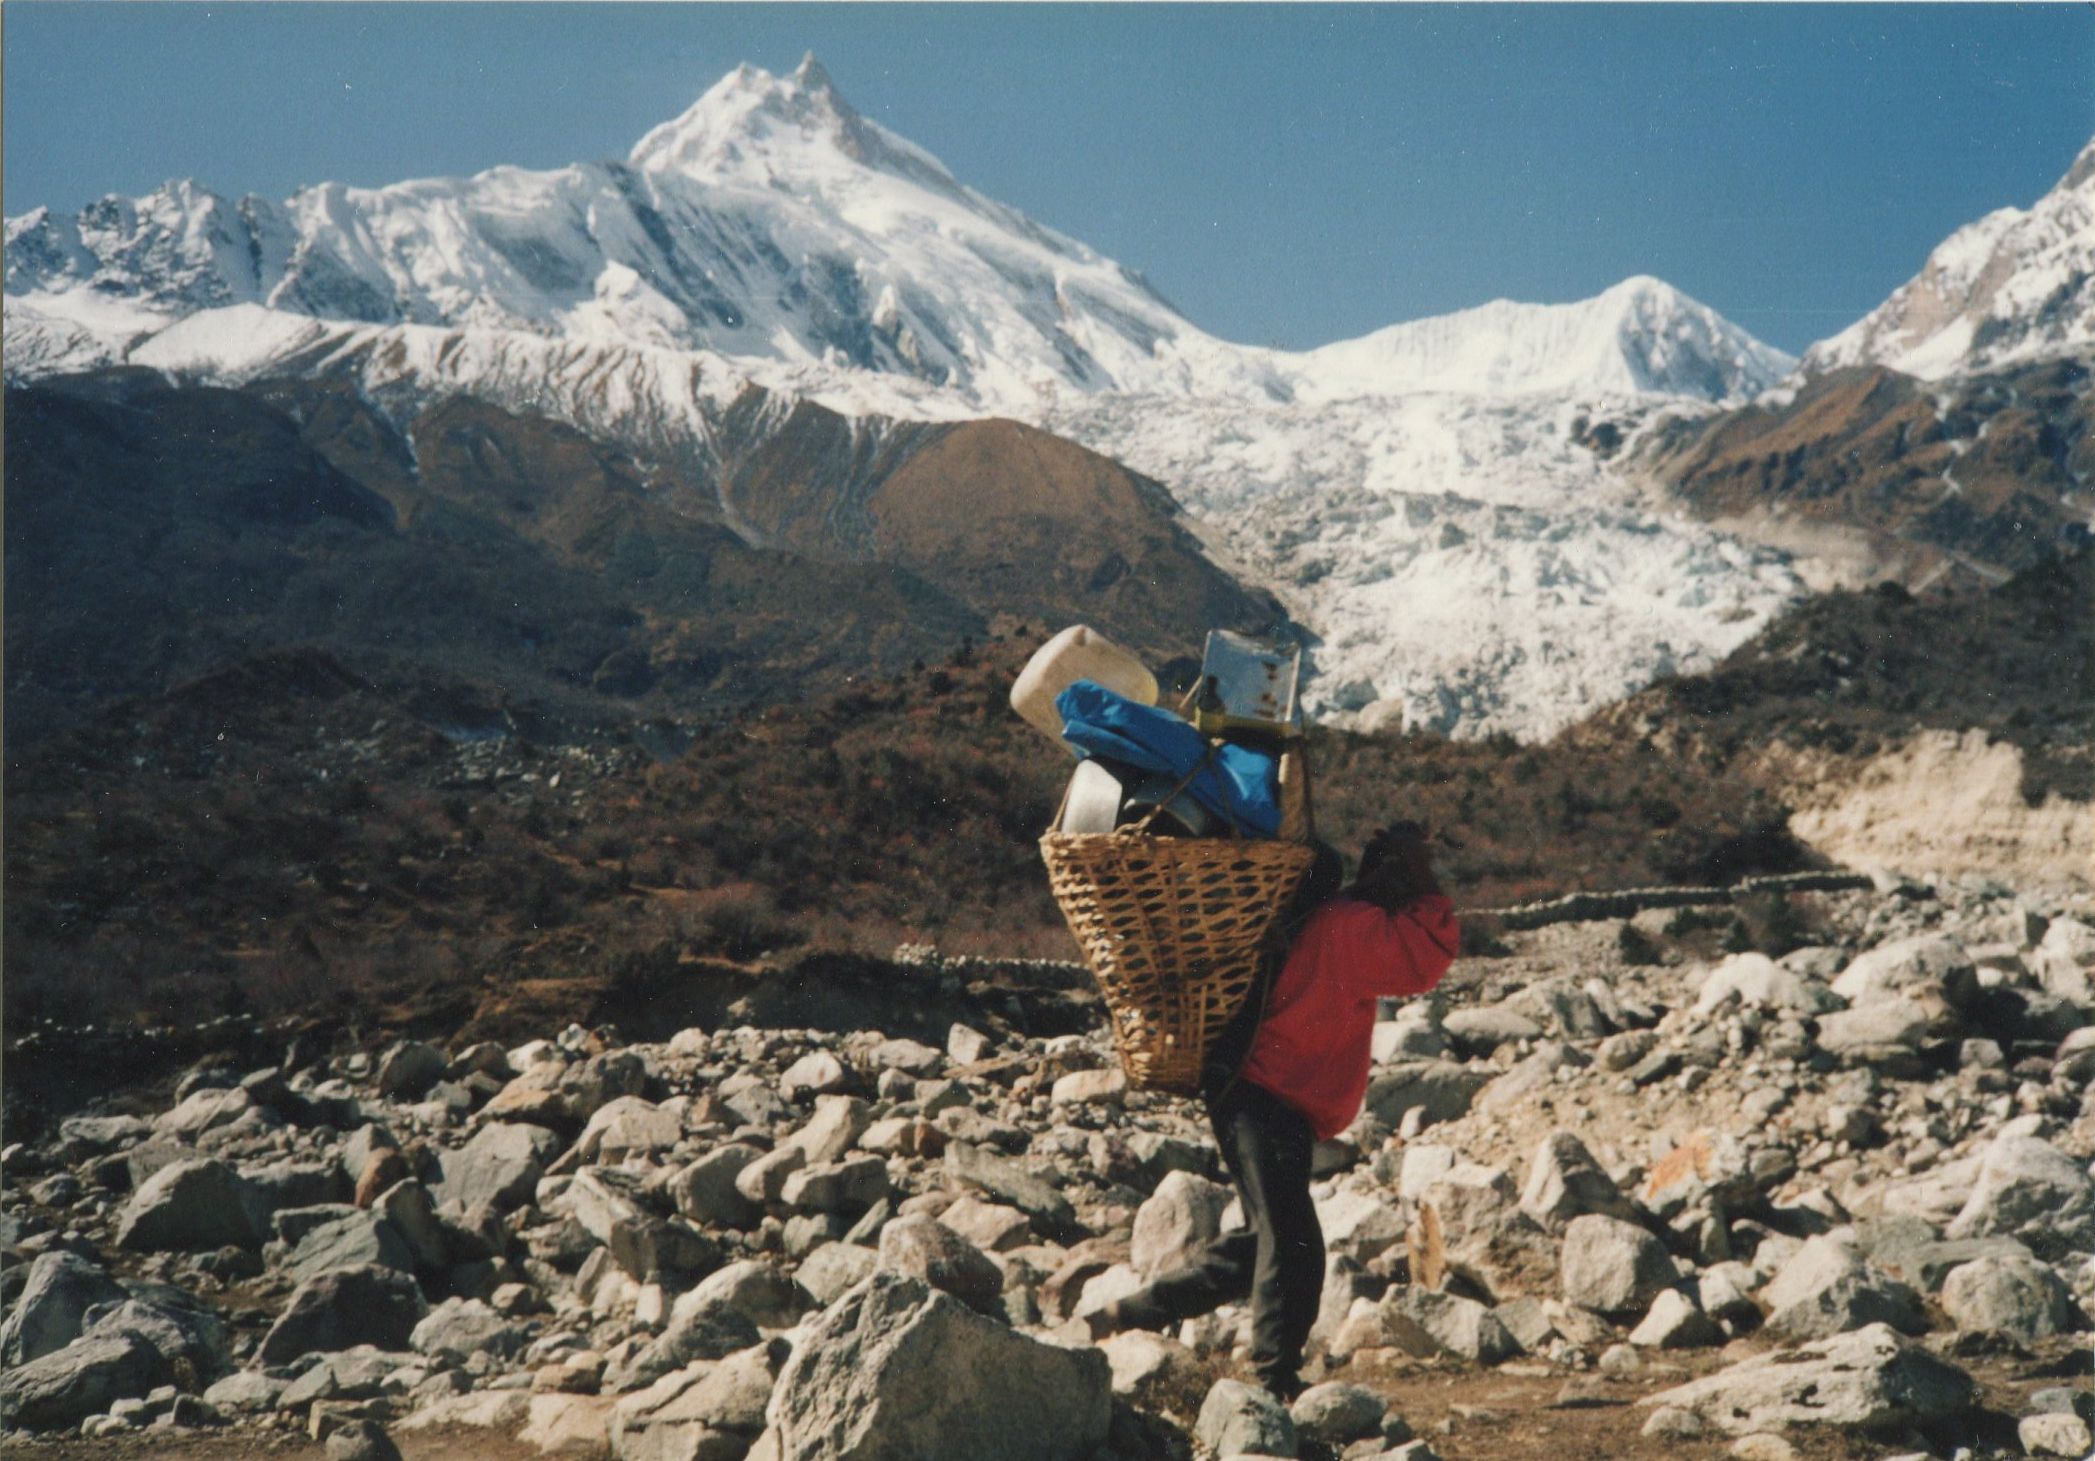 Mt.Manaslu on route from Samagaon to Samdu in the Buri Gandaki Valley